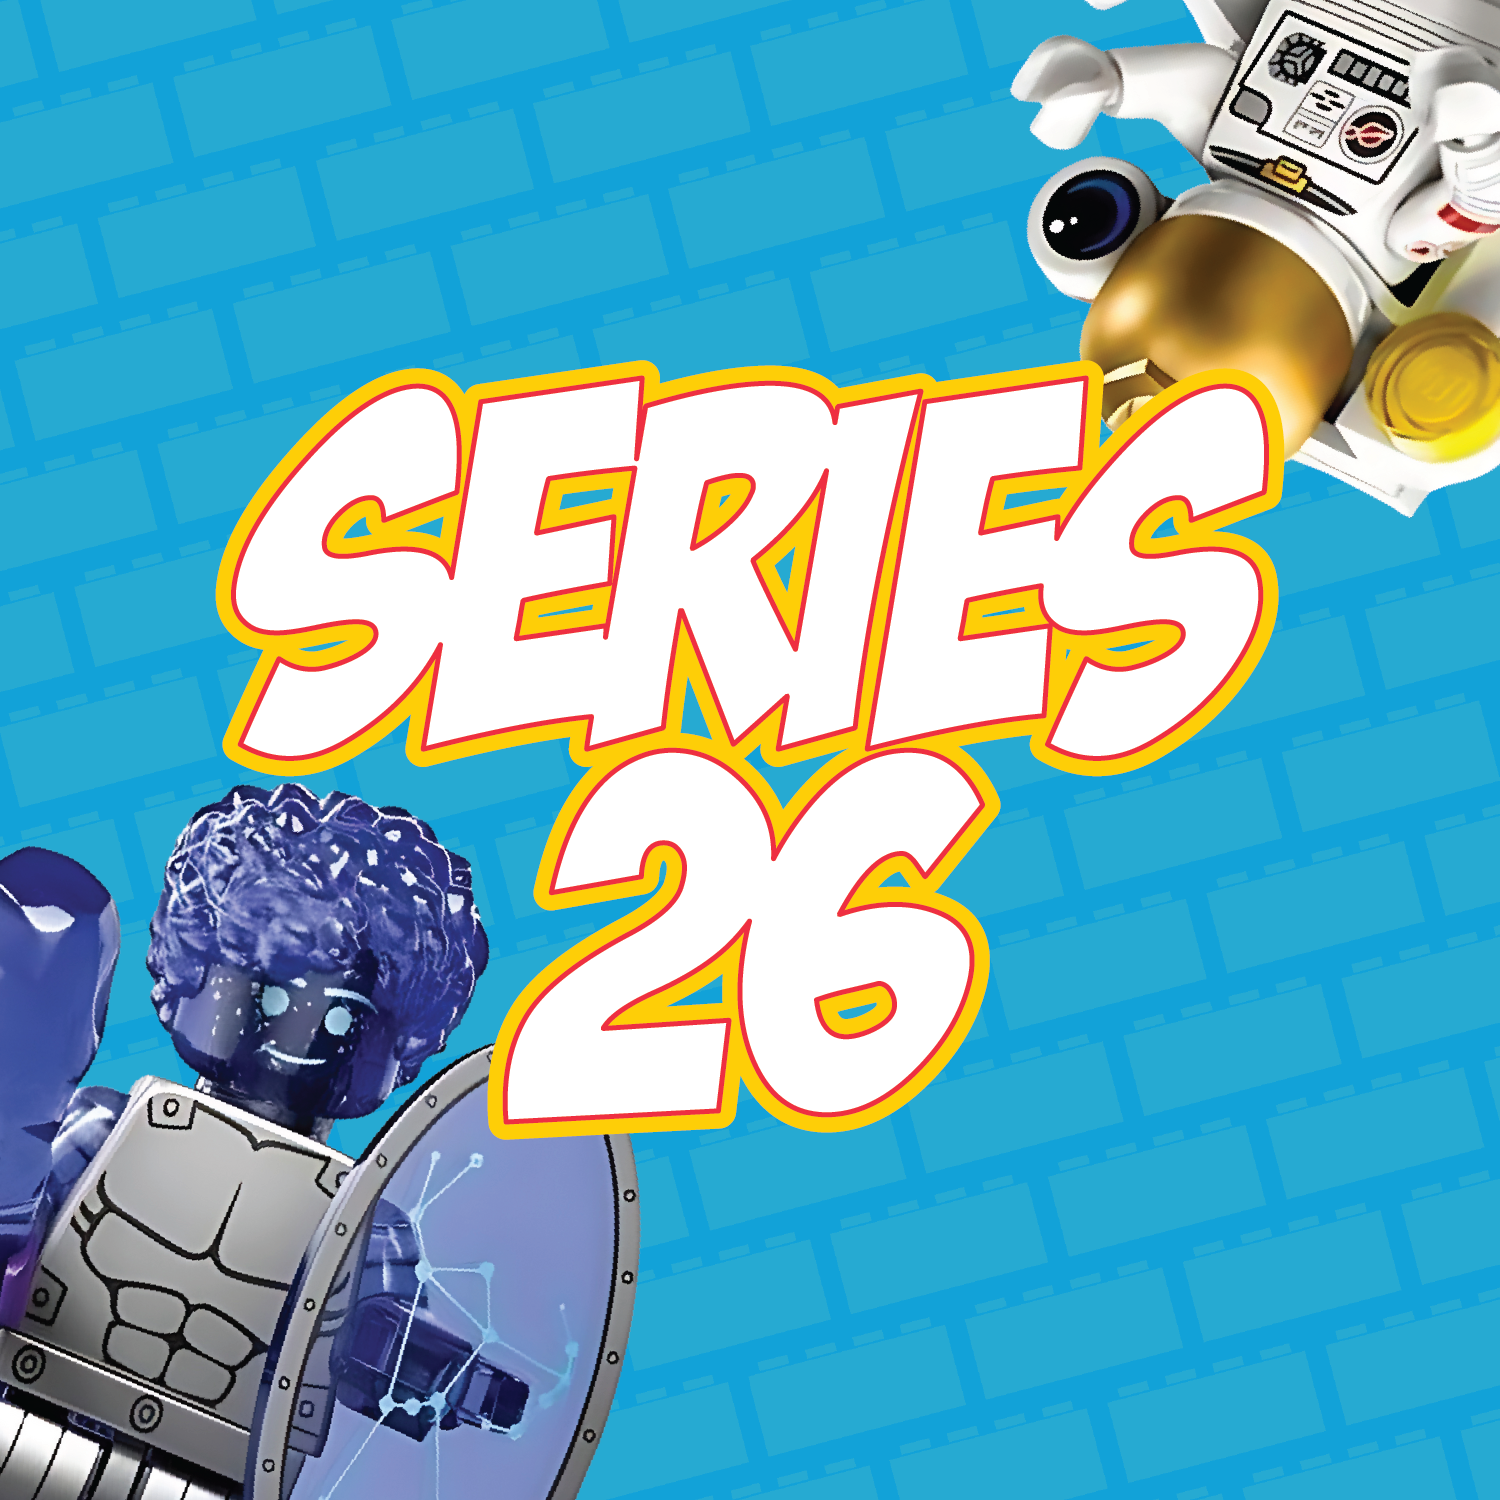 Series 26